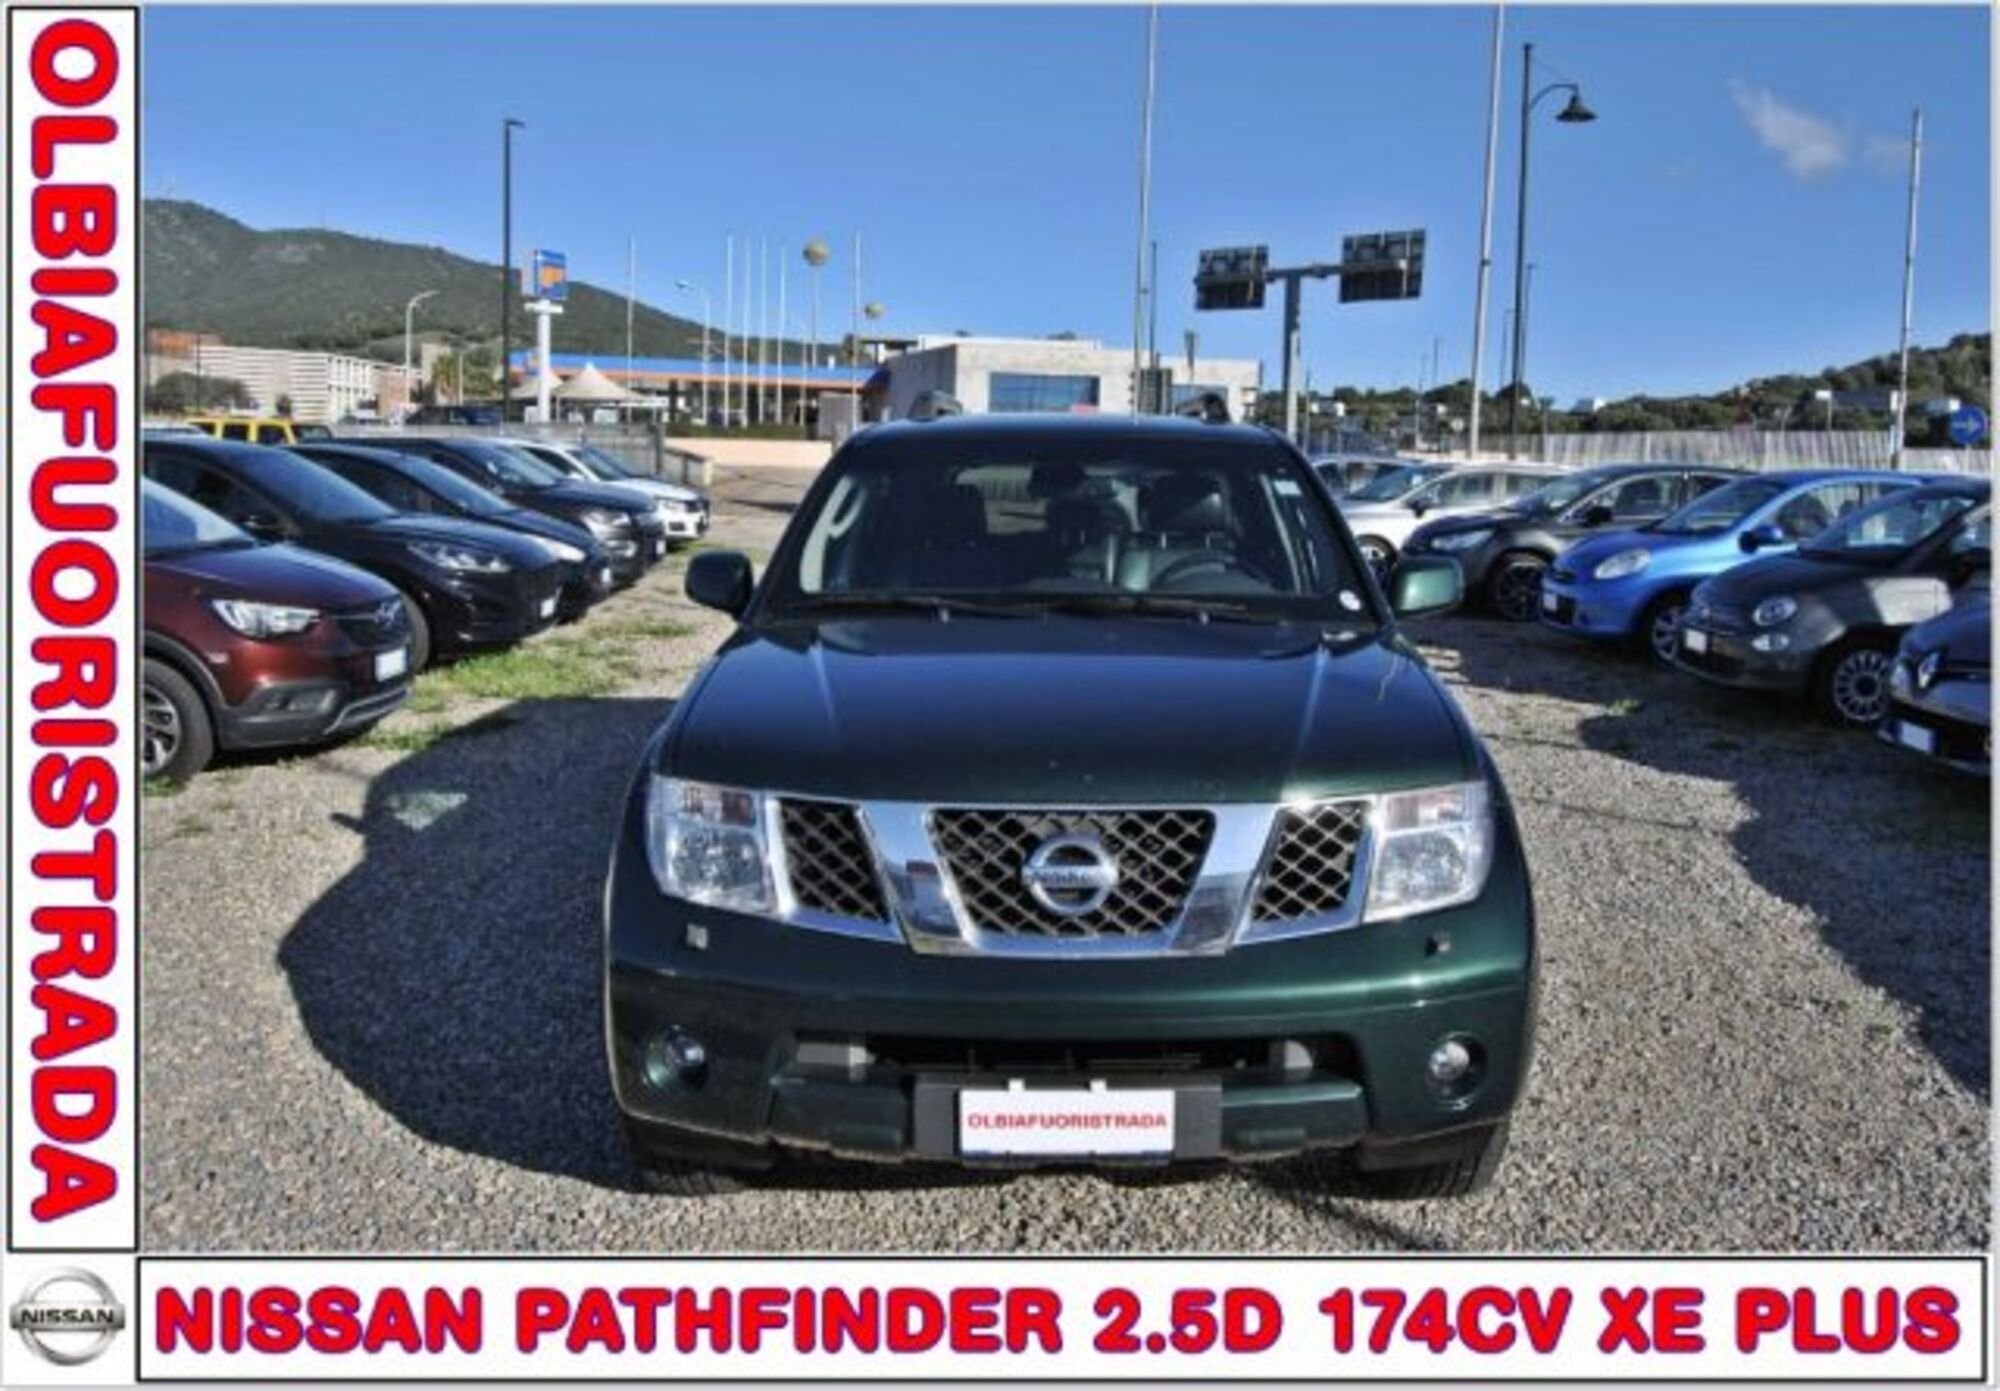 Nissan Pathfinder dCi XE Plus my 05